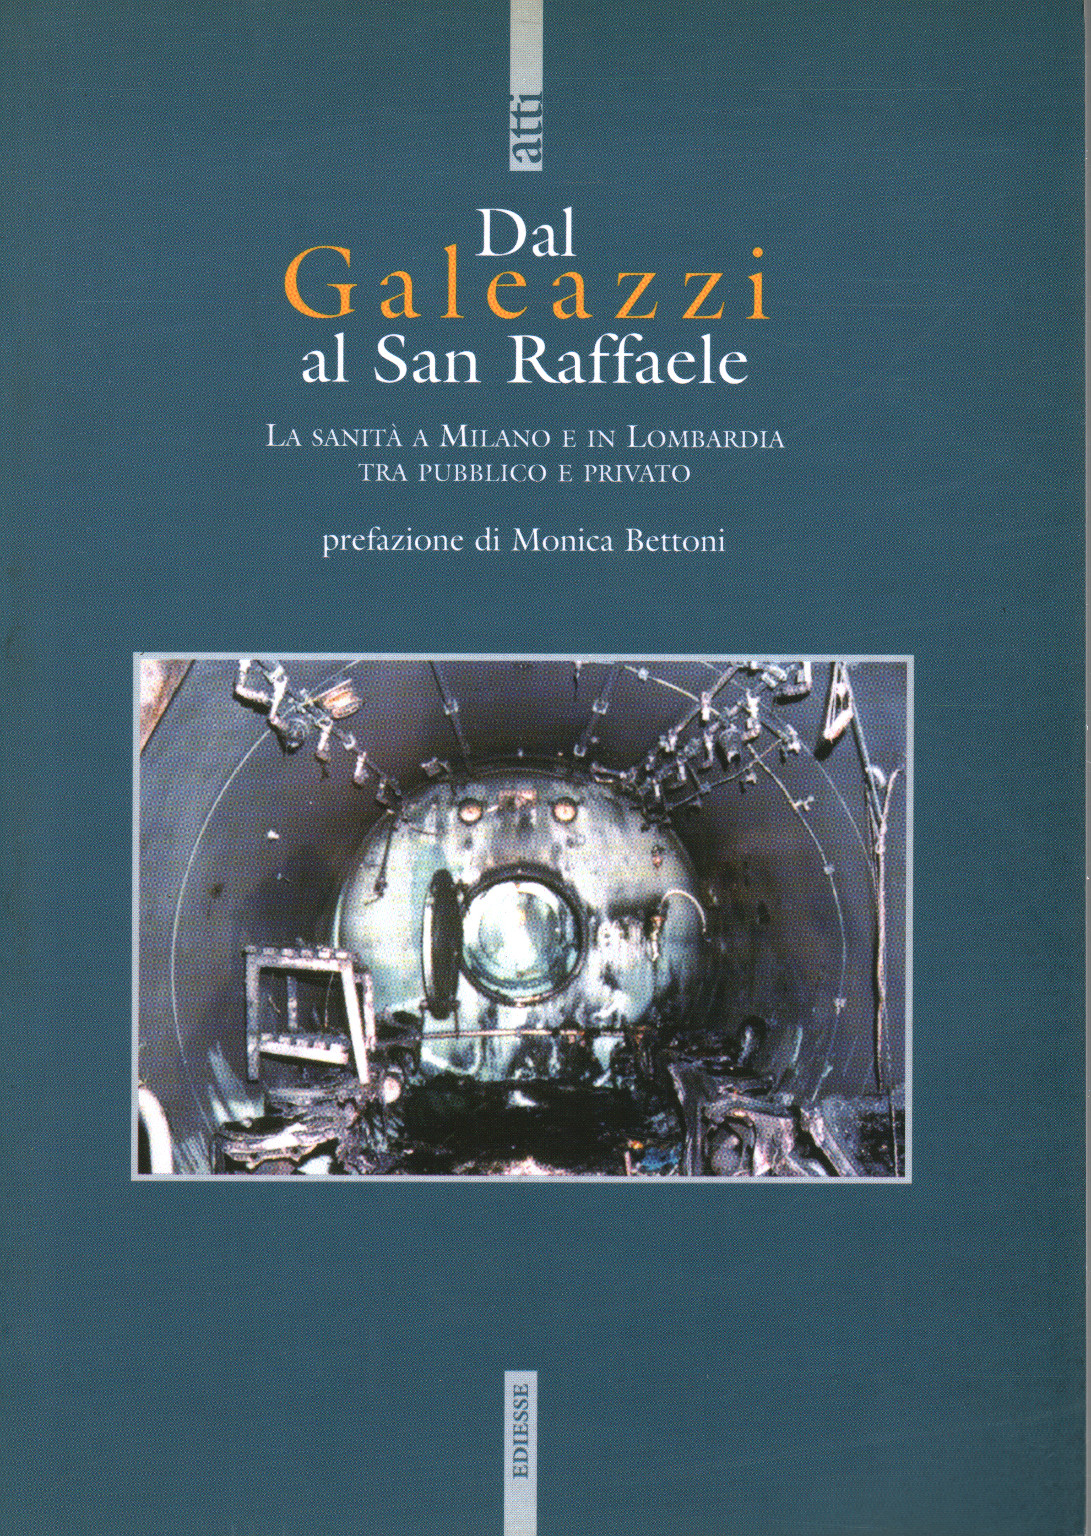 Dal Galeazzi al San Raffaele, s.a.